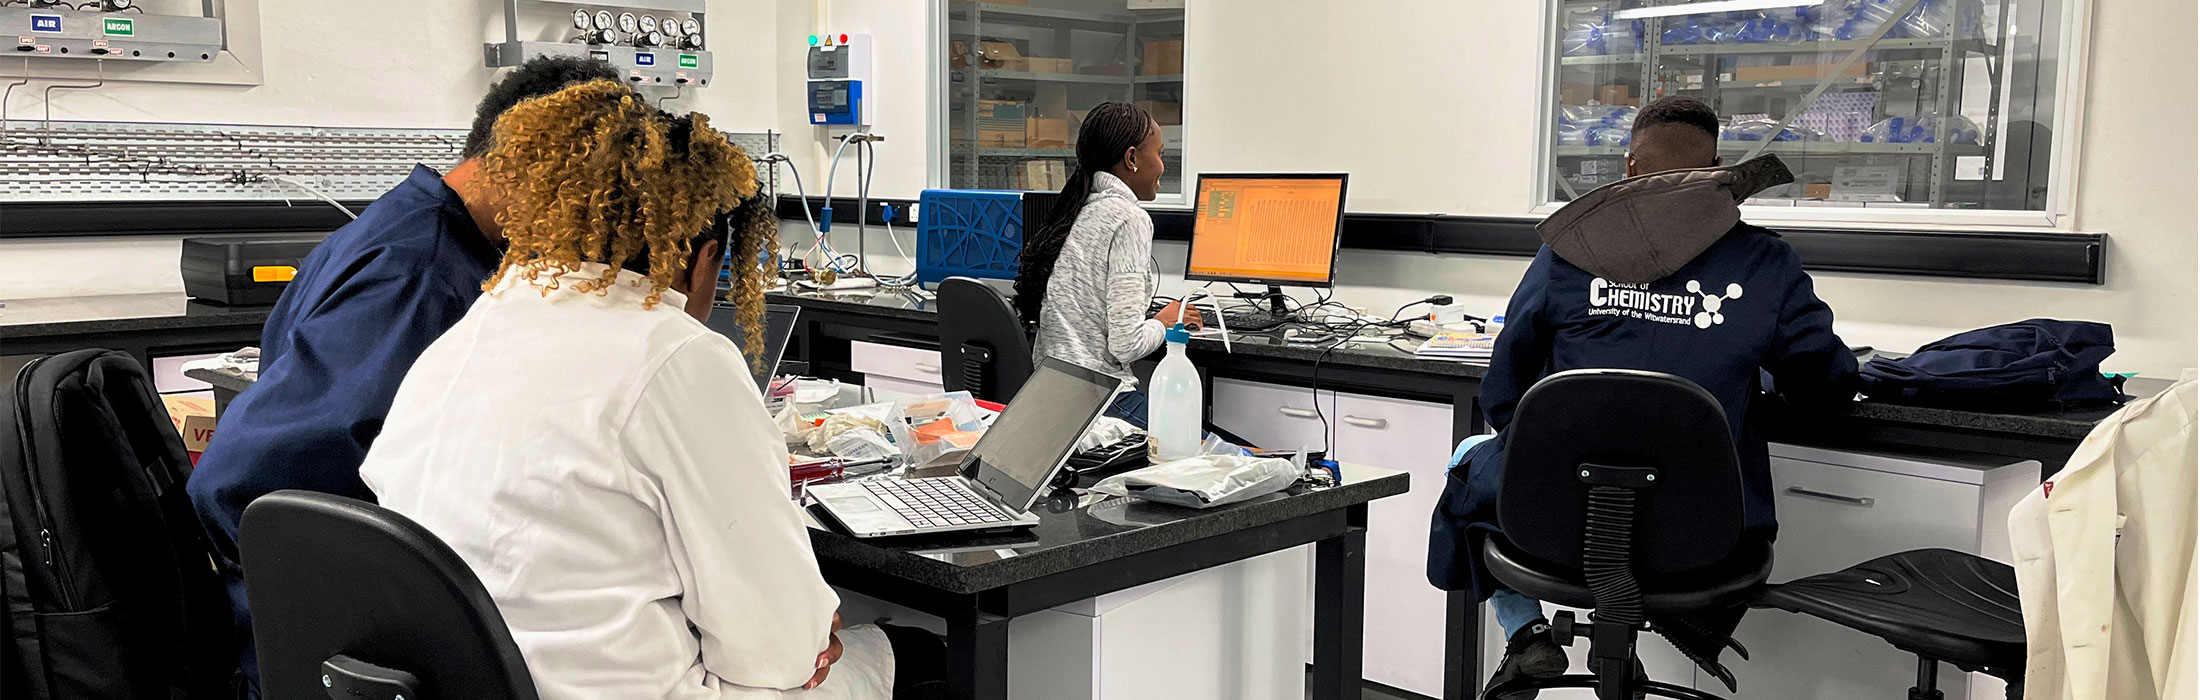 Postgraduate students in laboratory